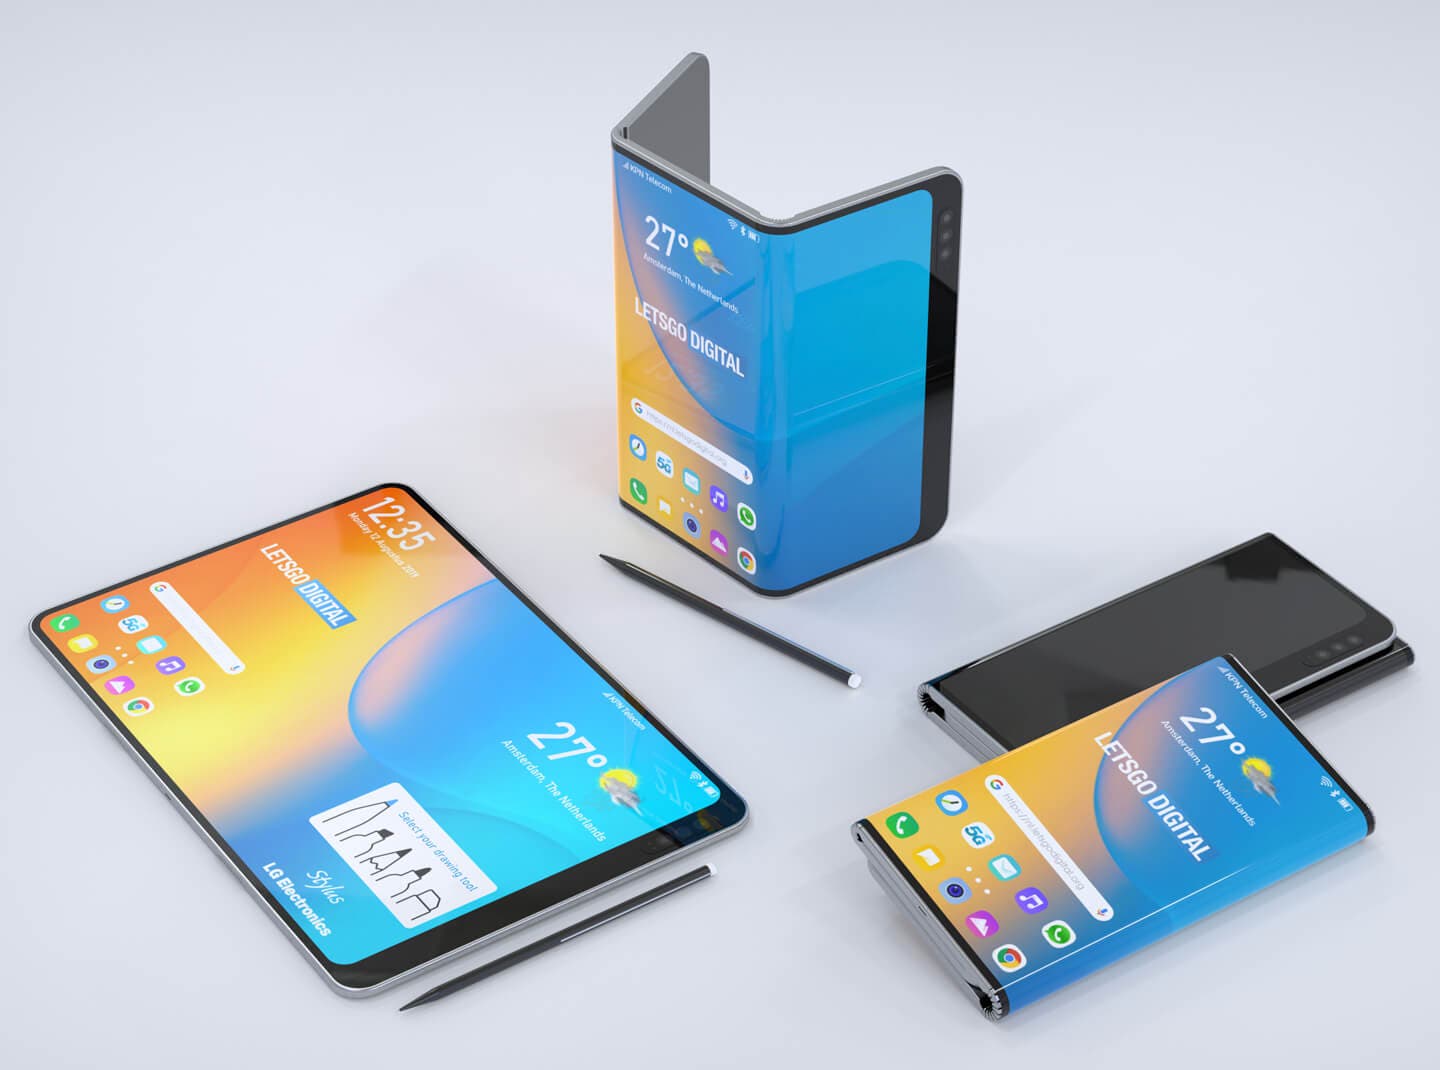 LG Foldable phone